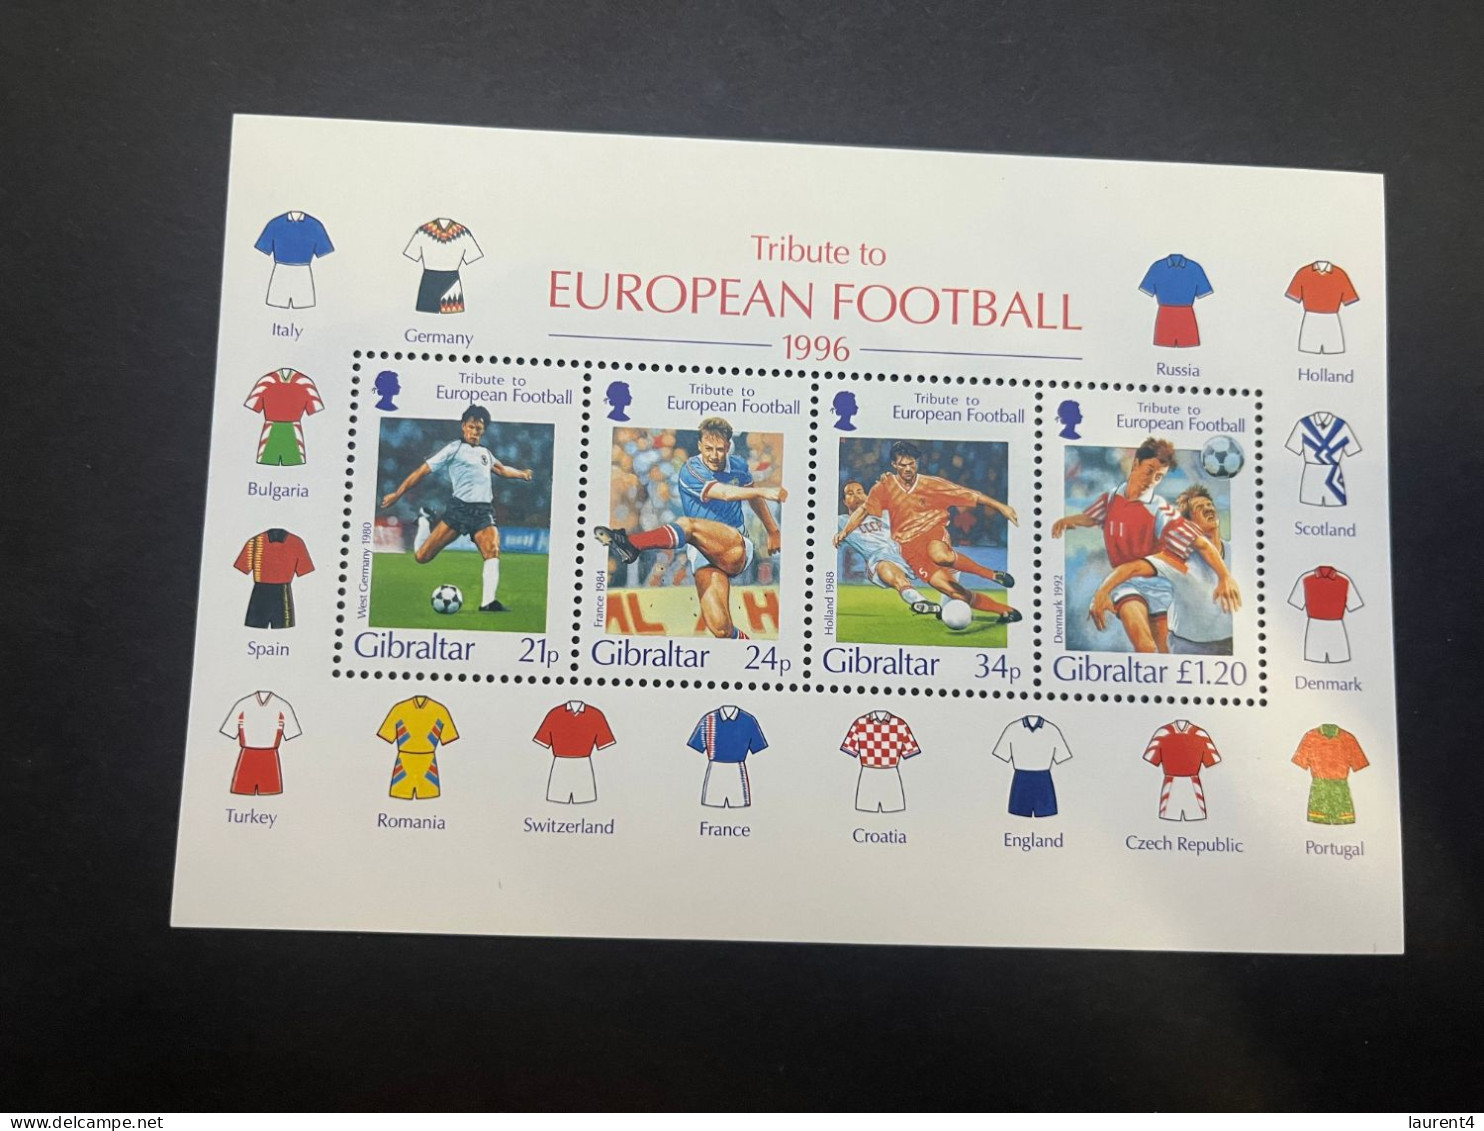 13-5-2024 (stamp) Mint (neuve) Mini-sheet - Gibraltar - European Football - UEFA European Championship